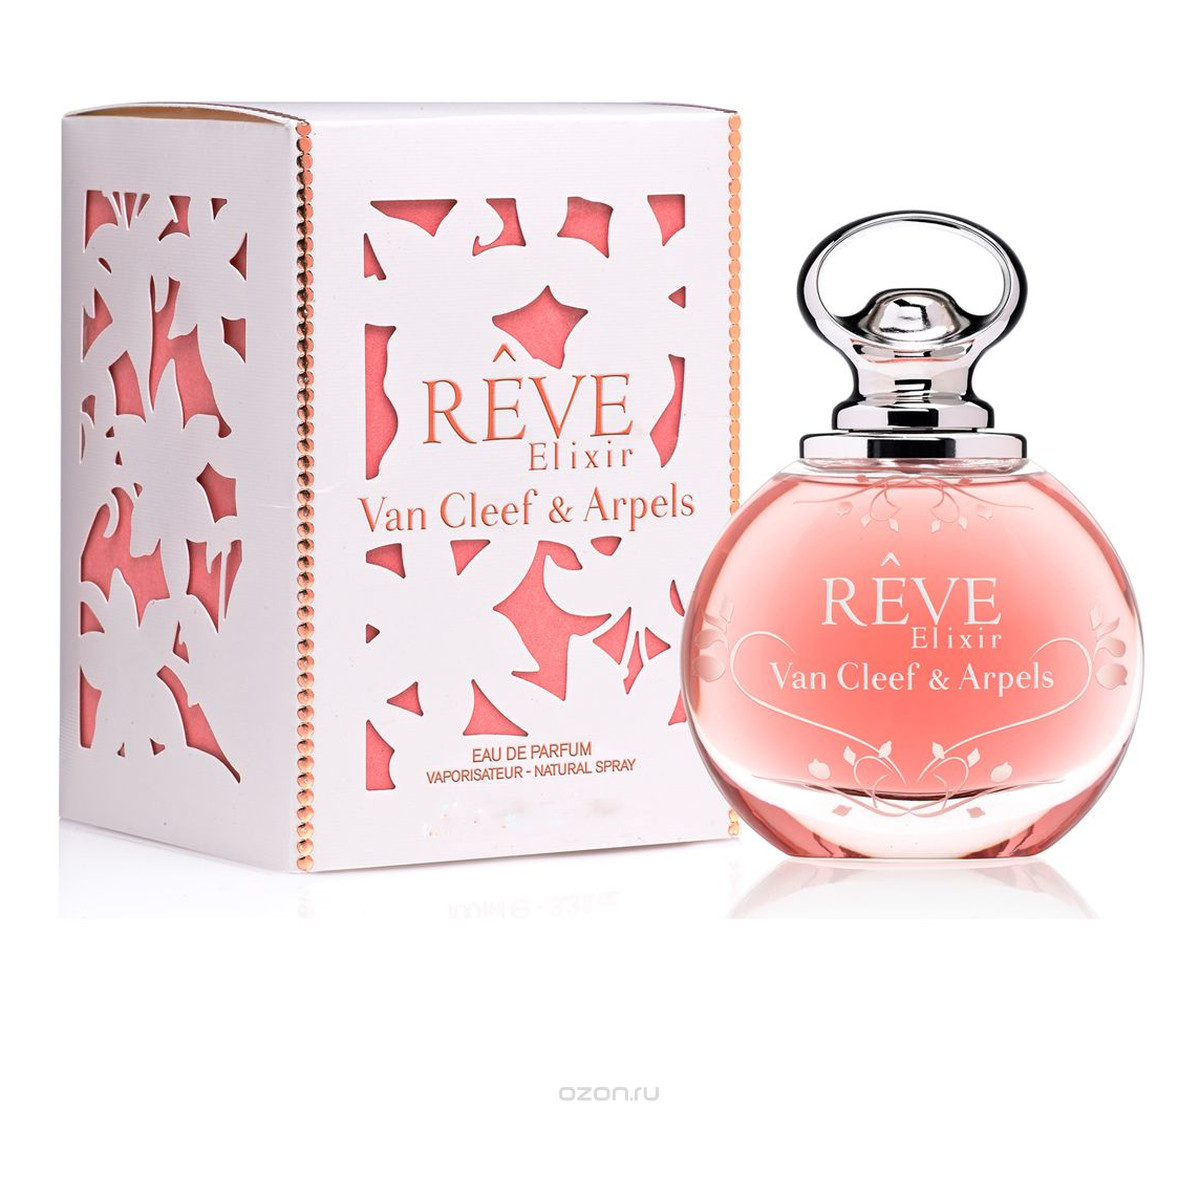 Van Cleef & Arpels Reve Elixir woda perfumowana 100ml